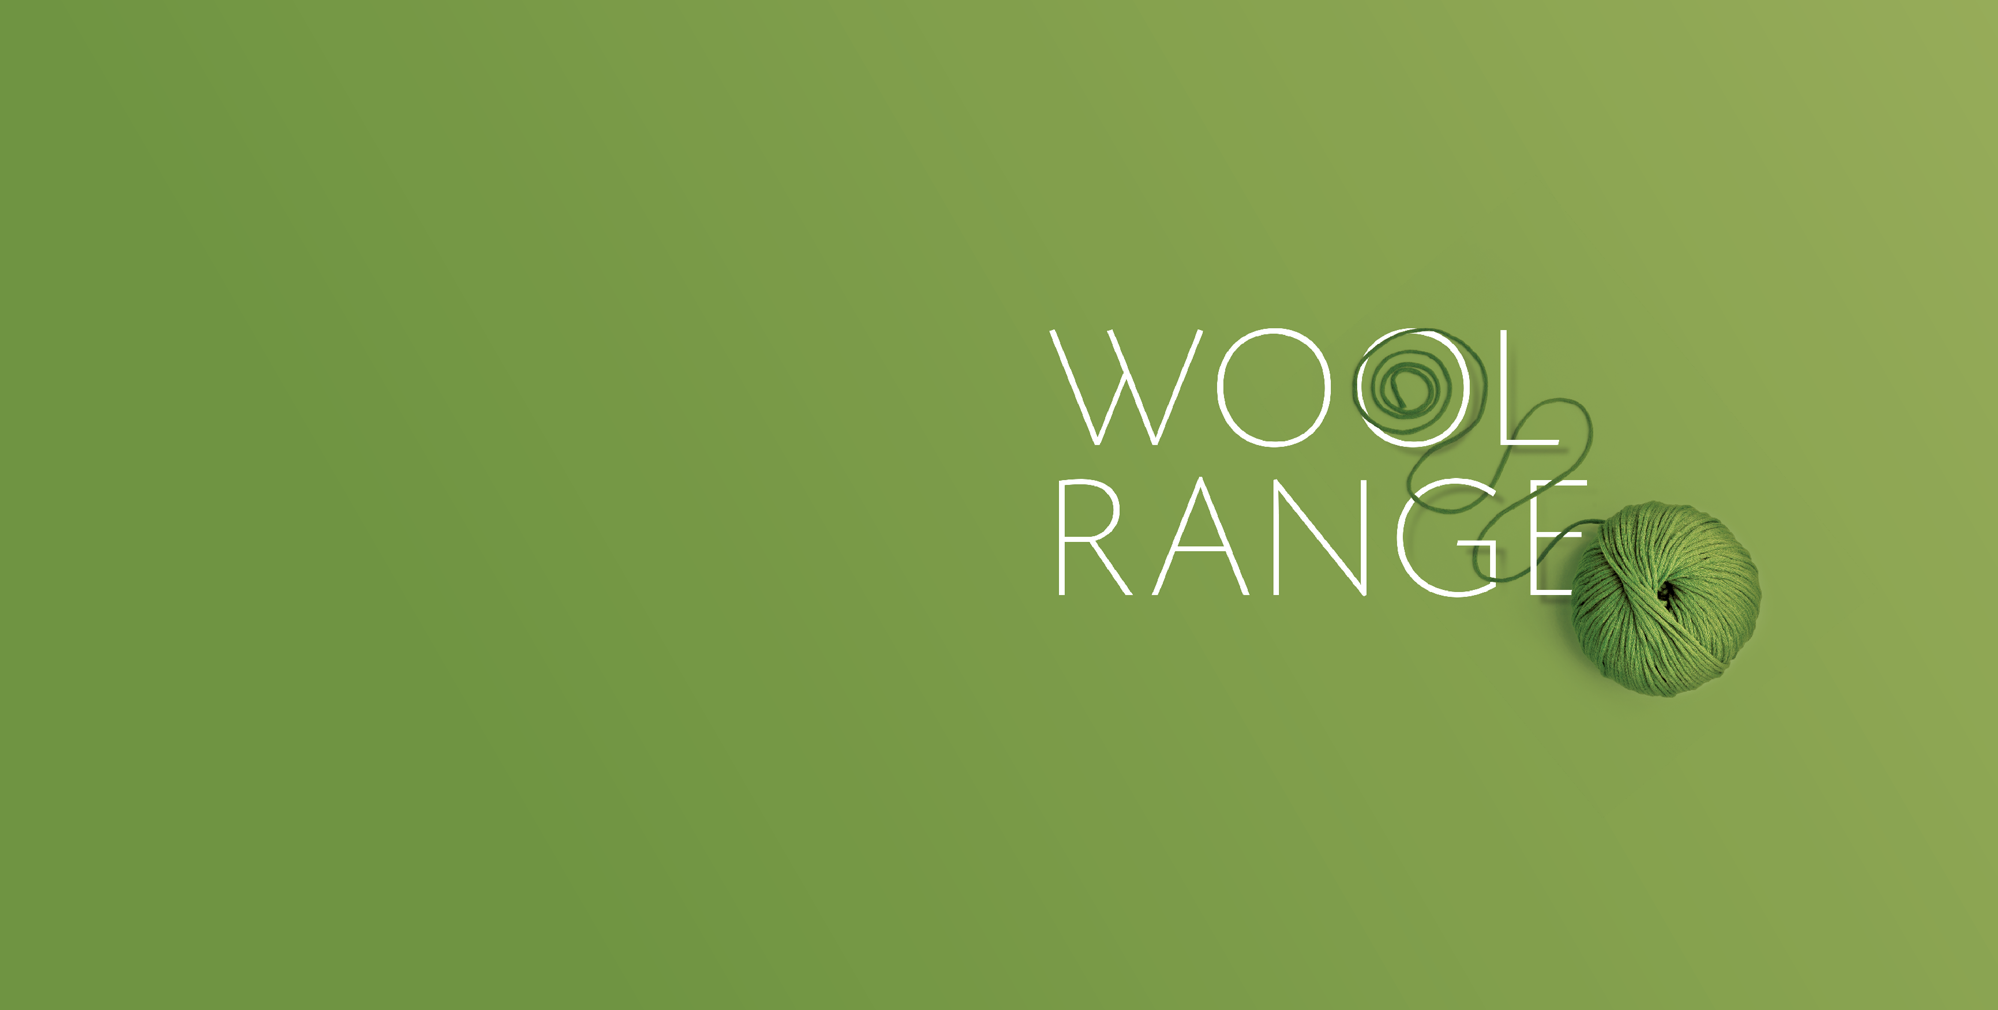 Wool Range